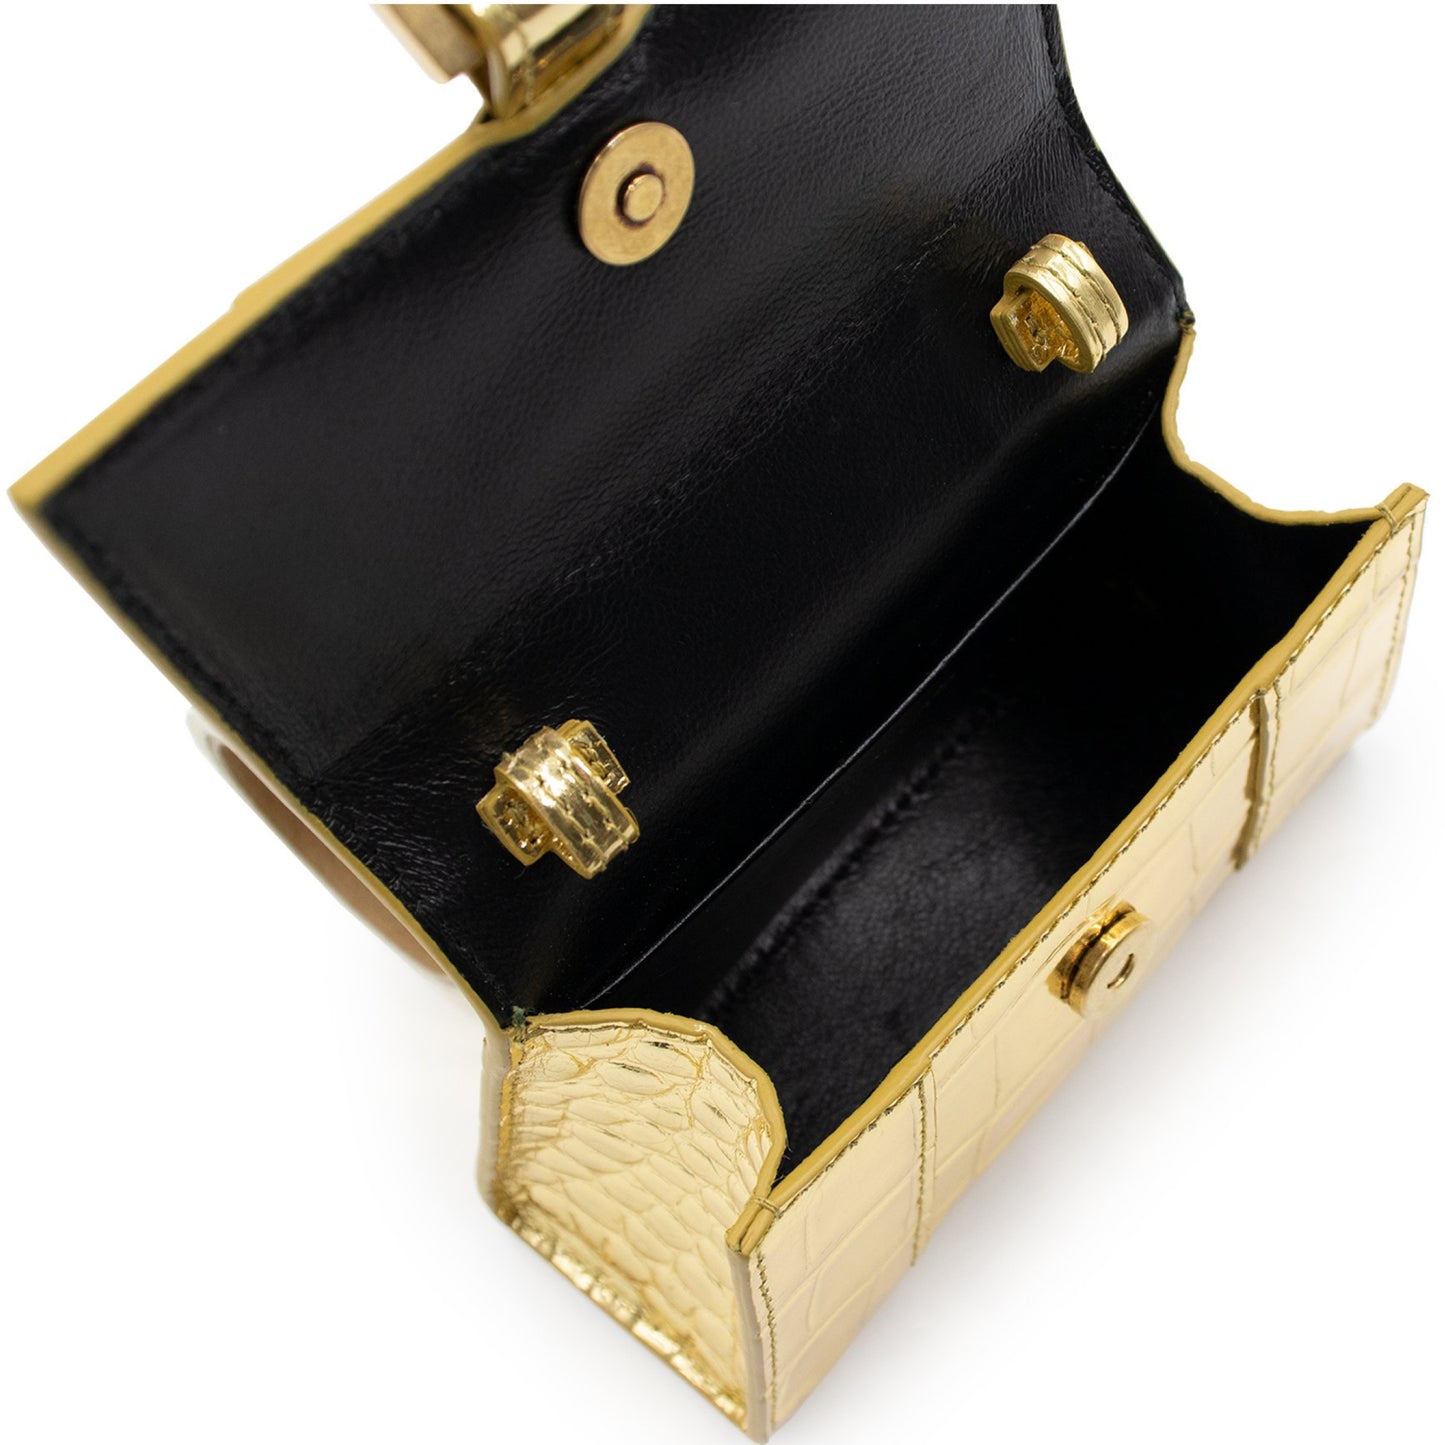 Hourglass Mini Embossed Croco Bag in Gold